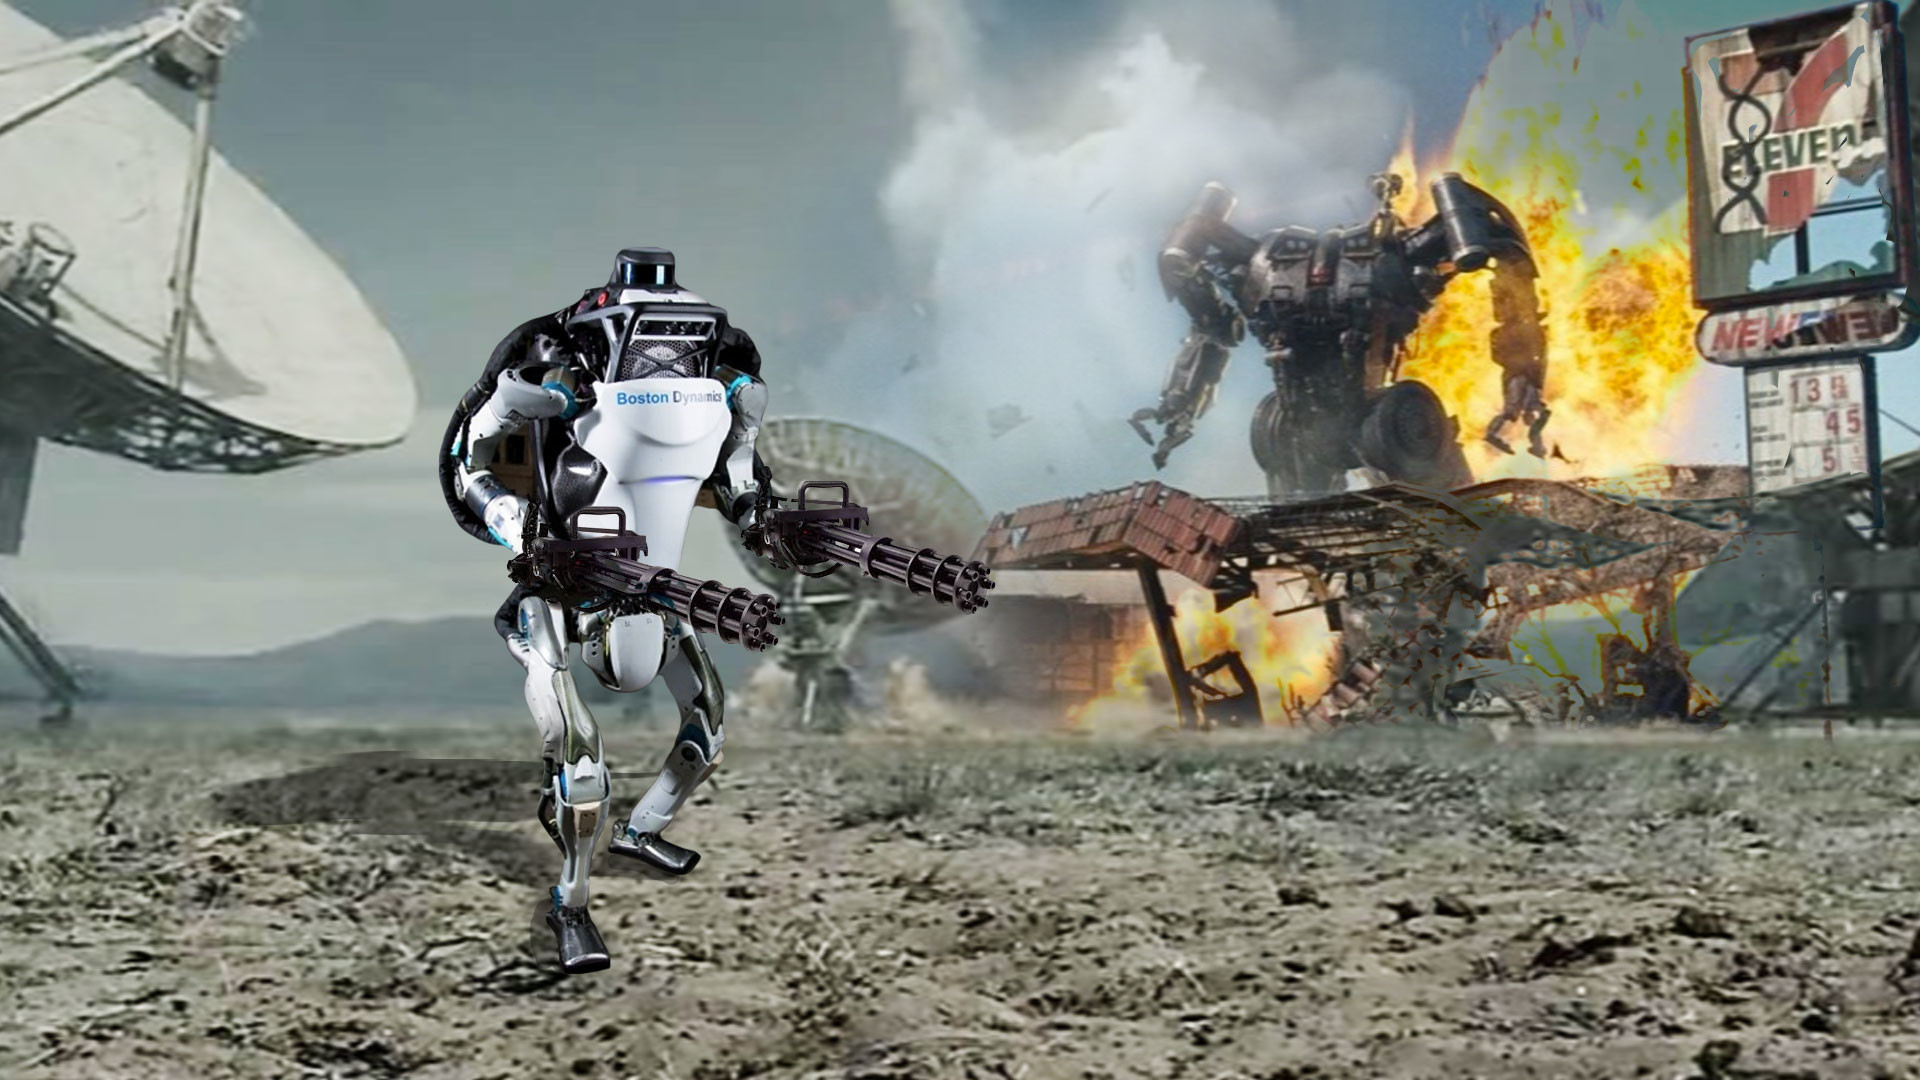 Коллаж&nbsp;&copy; L!FE. Фото&nbsp;&copy; Boston Dynamics// Кадр фильма "Терминатор: Да придёт спаситель"/ &copy; Кинопоиск